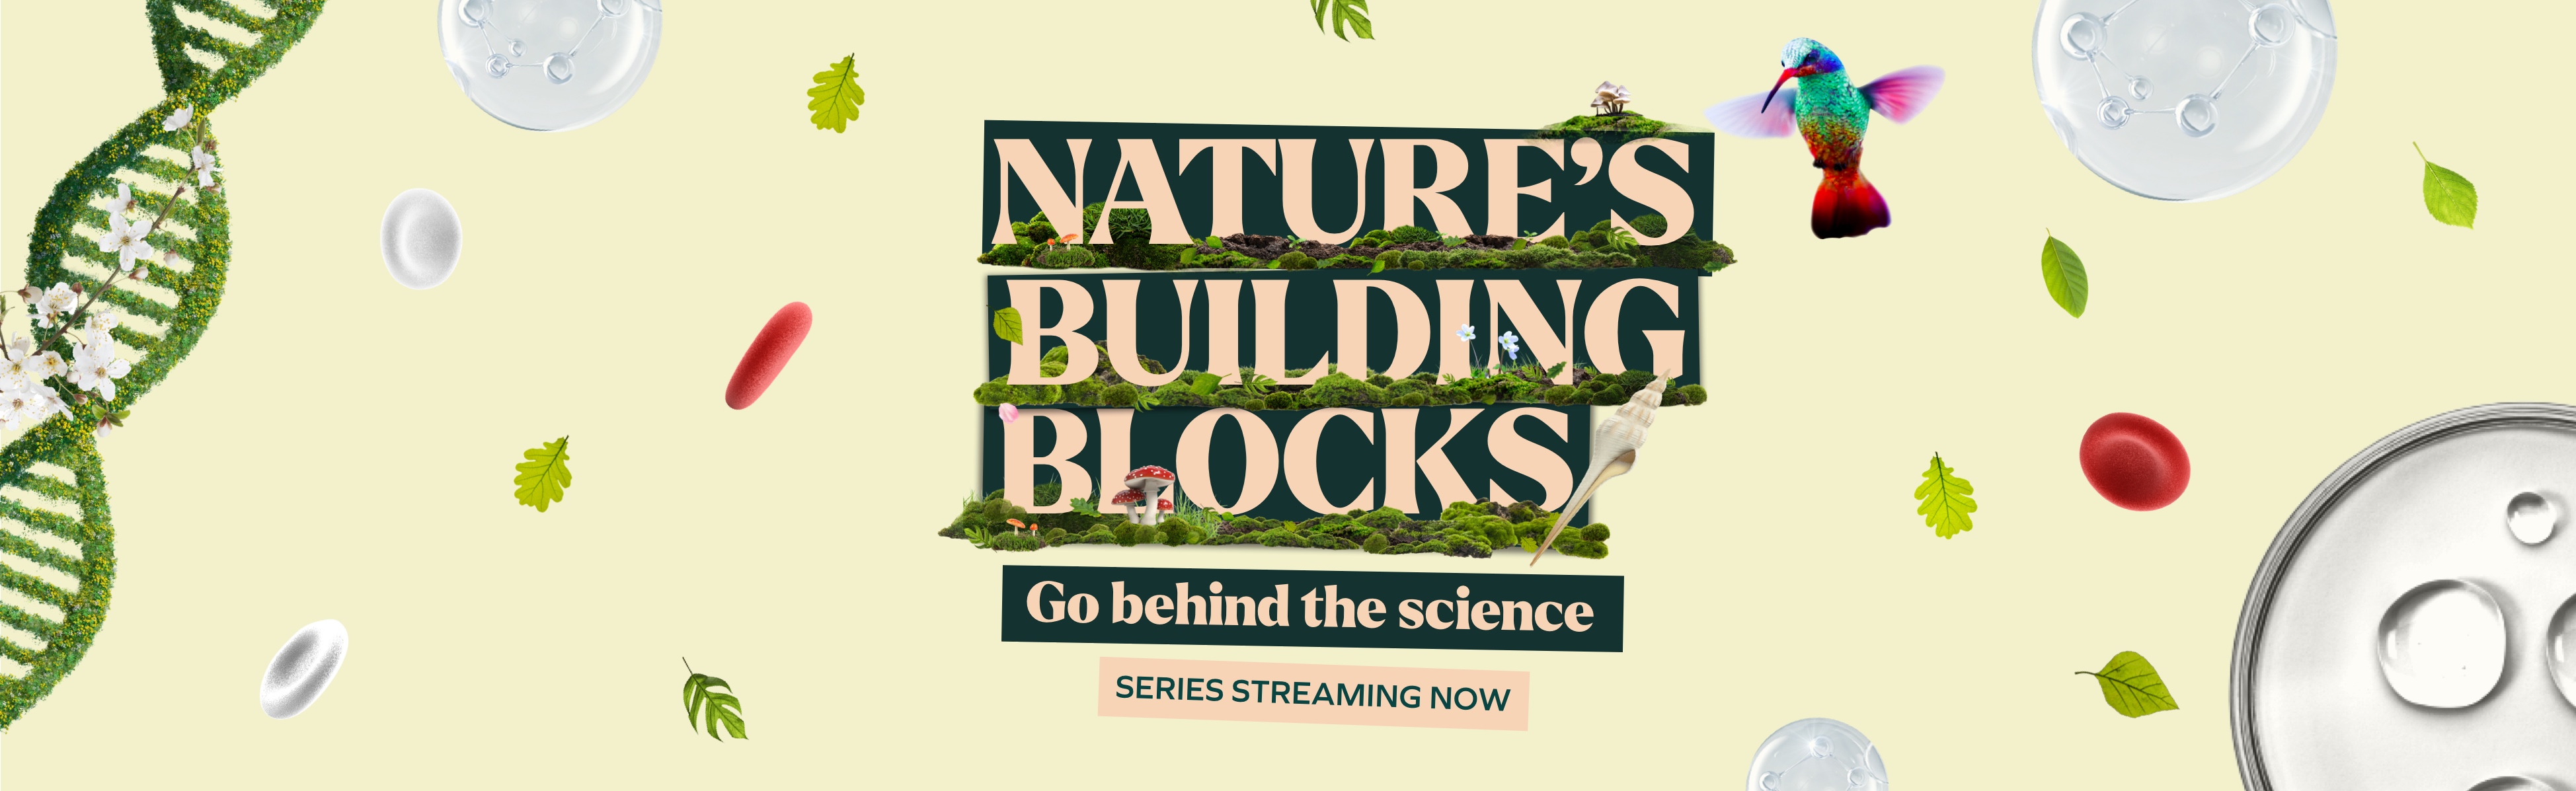 Nature's Building Blocks - Watch Now!